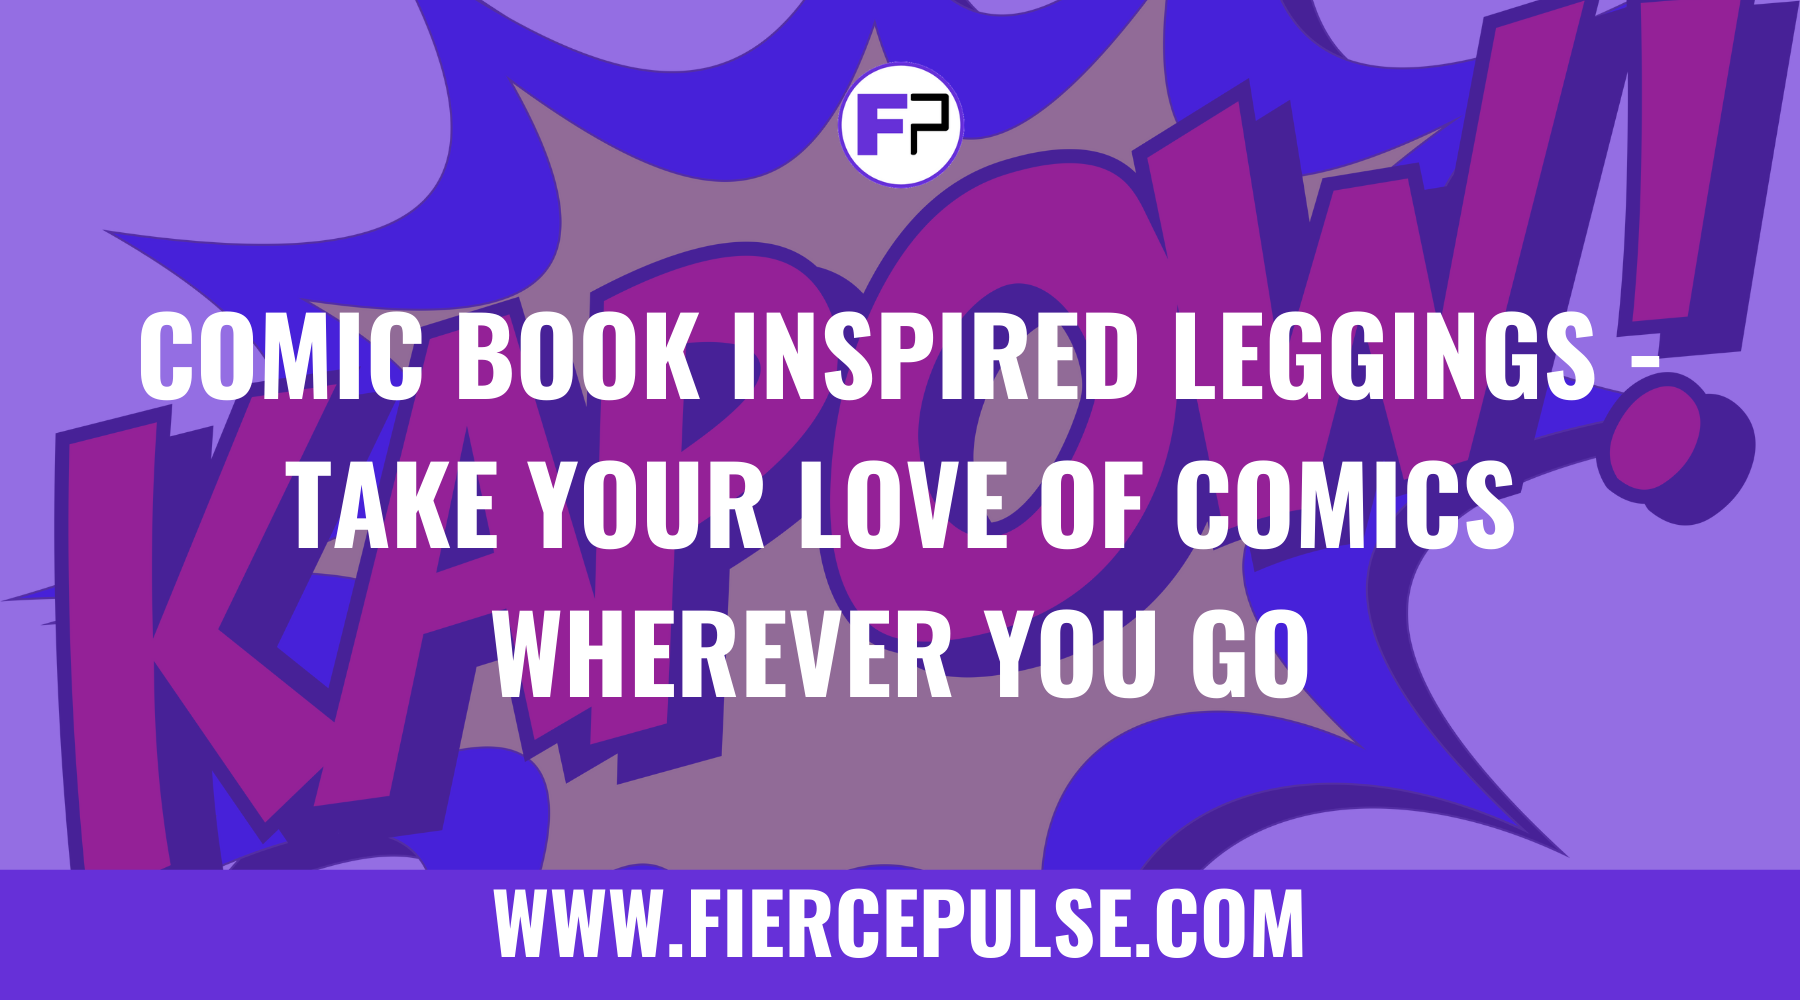 Comic Book Inspired Leggings - Take Your Love of Comics Wherever You Go